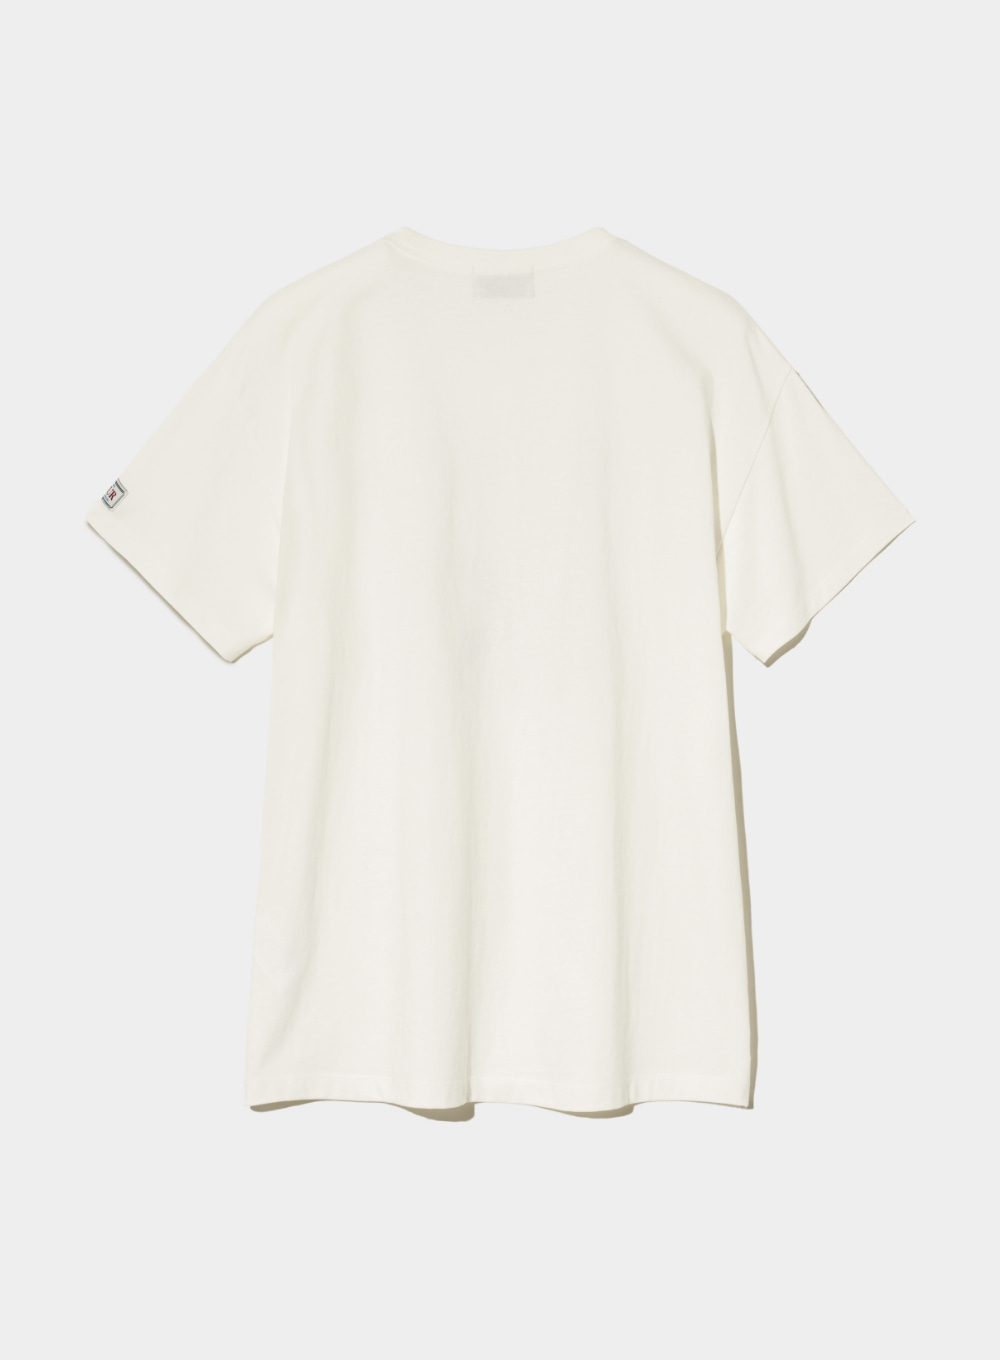 (W) Satur All Day T-Shirt - Cream Mint